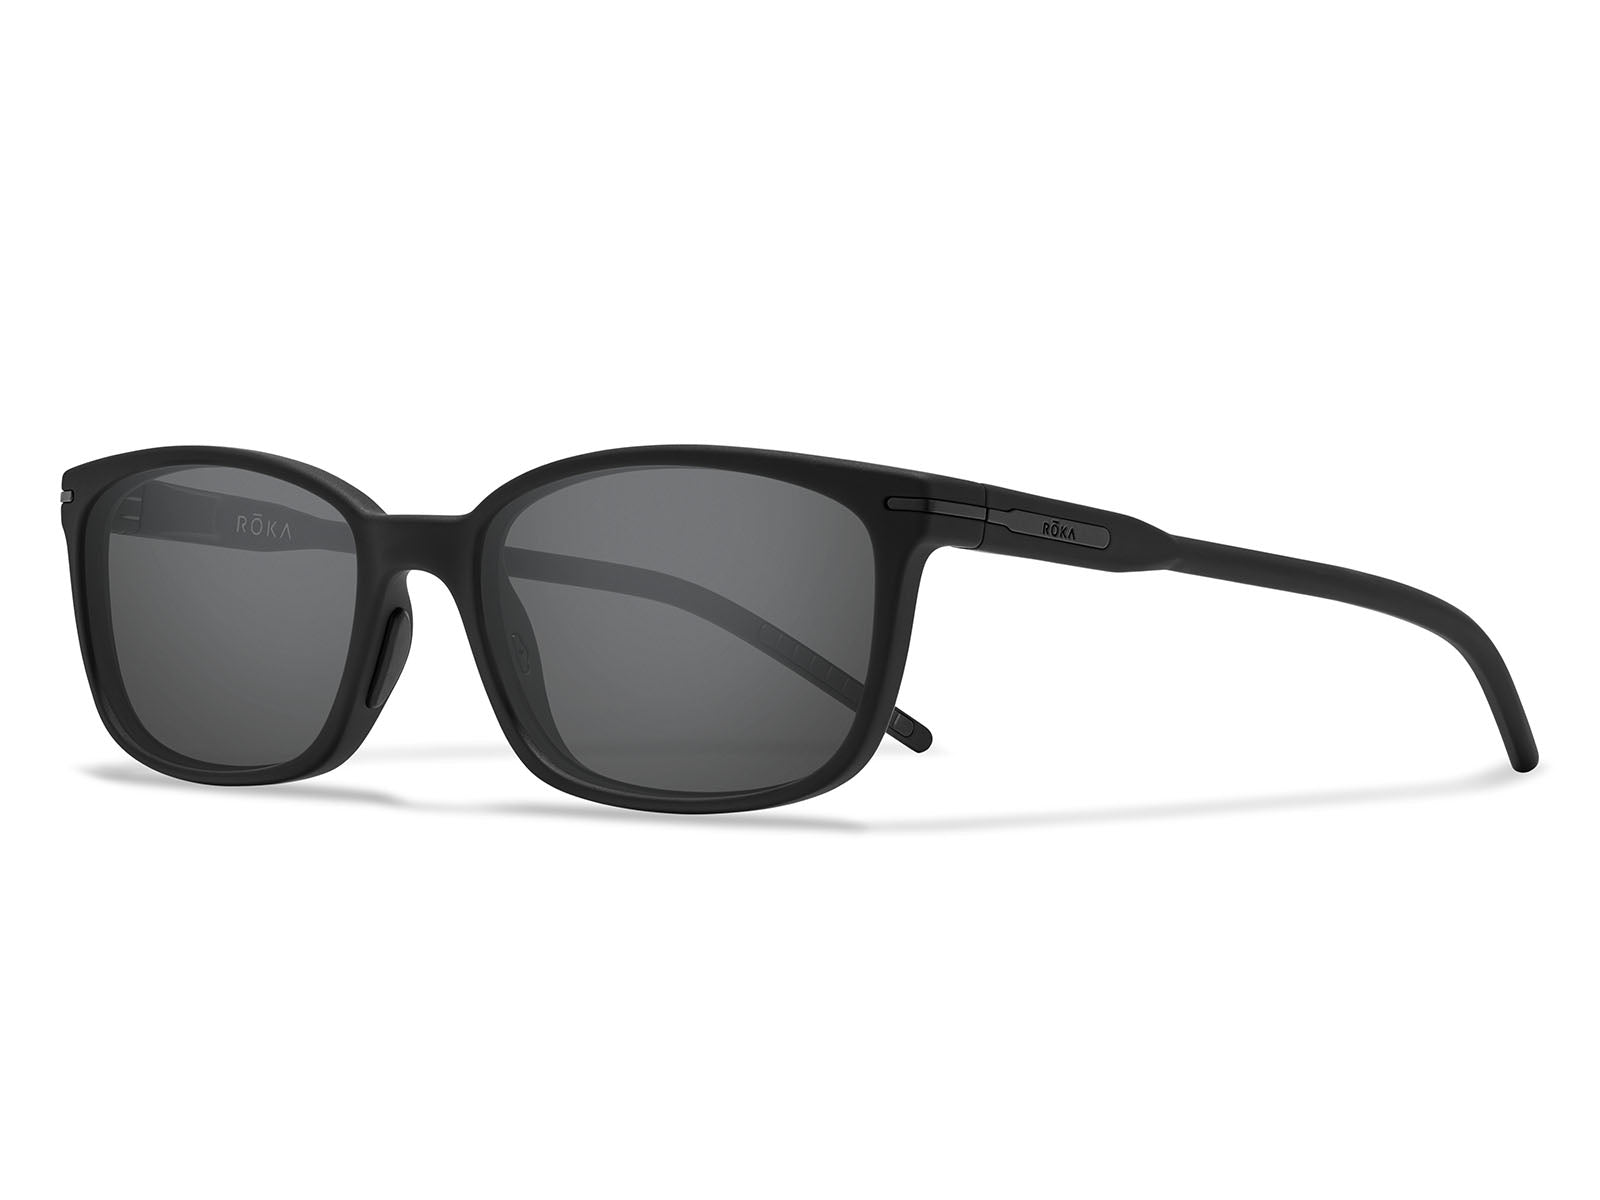 Rainey Sunglasses, Lightweight Slim Rectangular Sunglasses